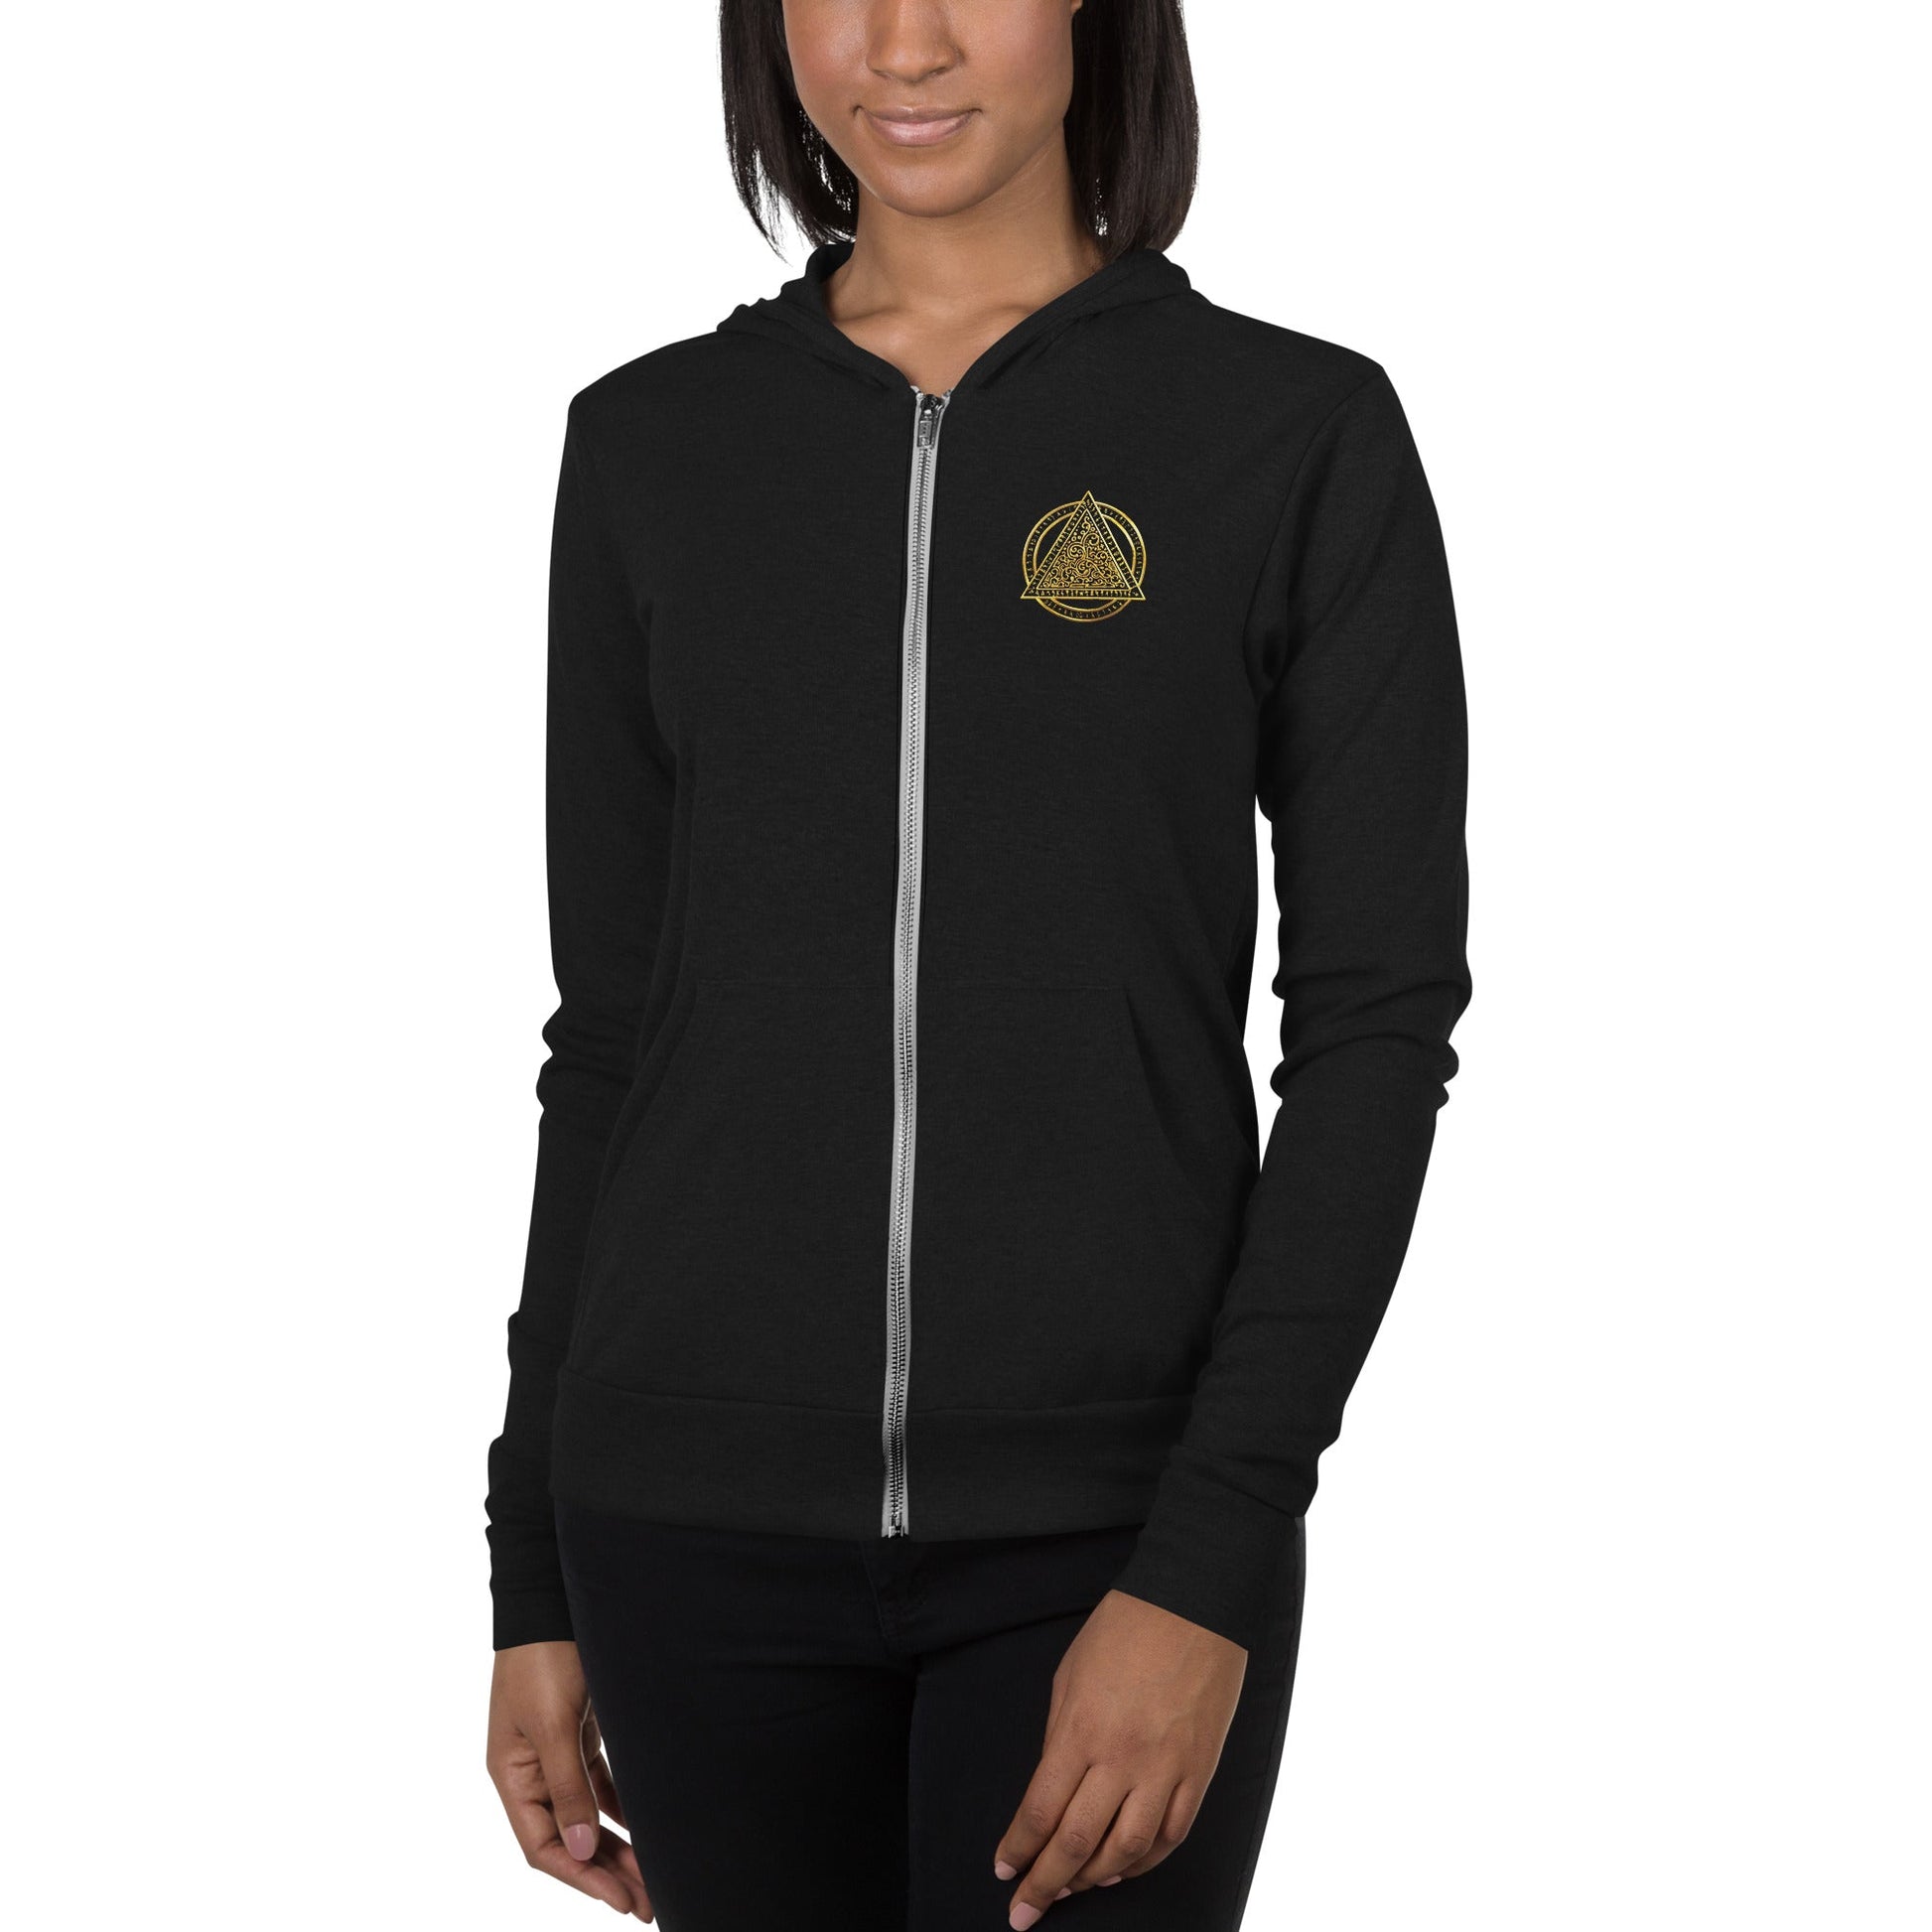 Unisex zip hoodie | The Baby-Eater - Spectral Ink Shop - Sweaters and Hoodies -6976361_9202